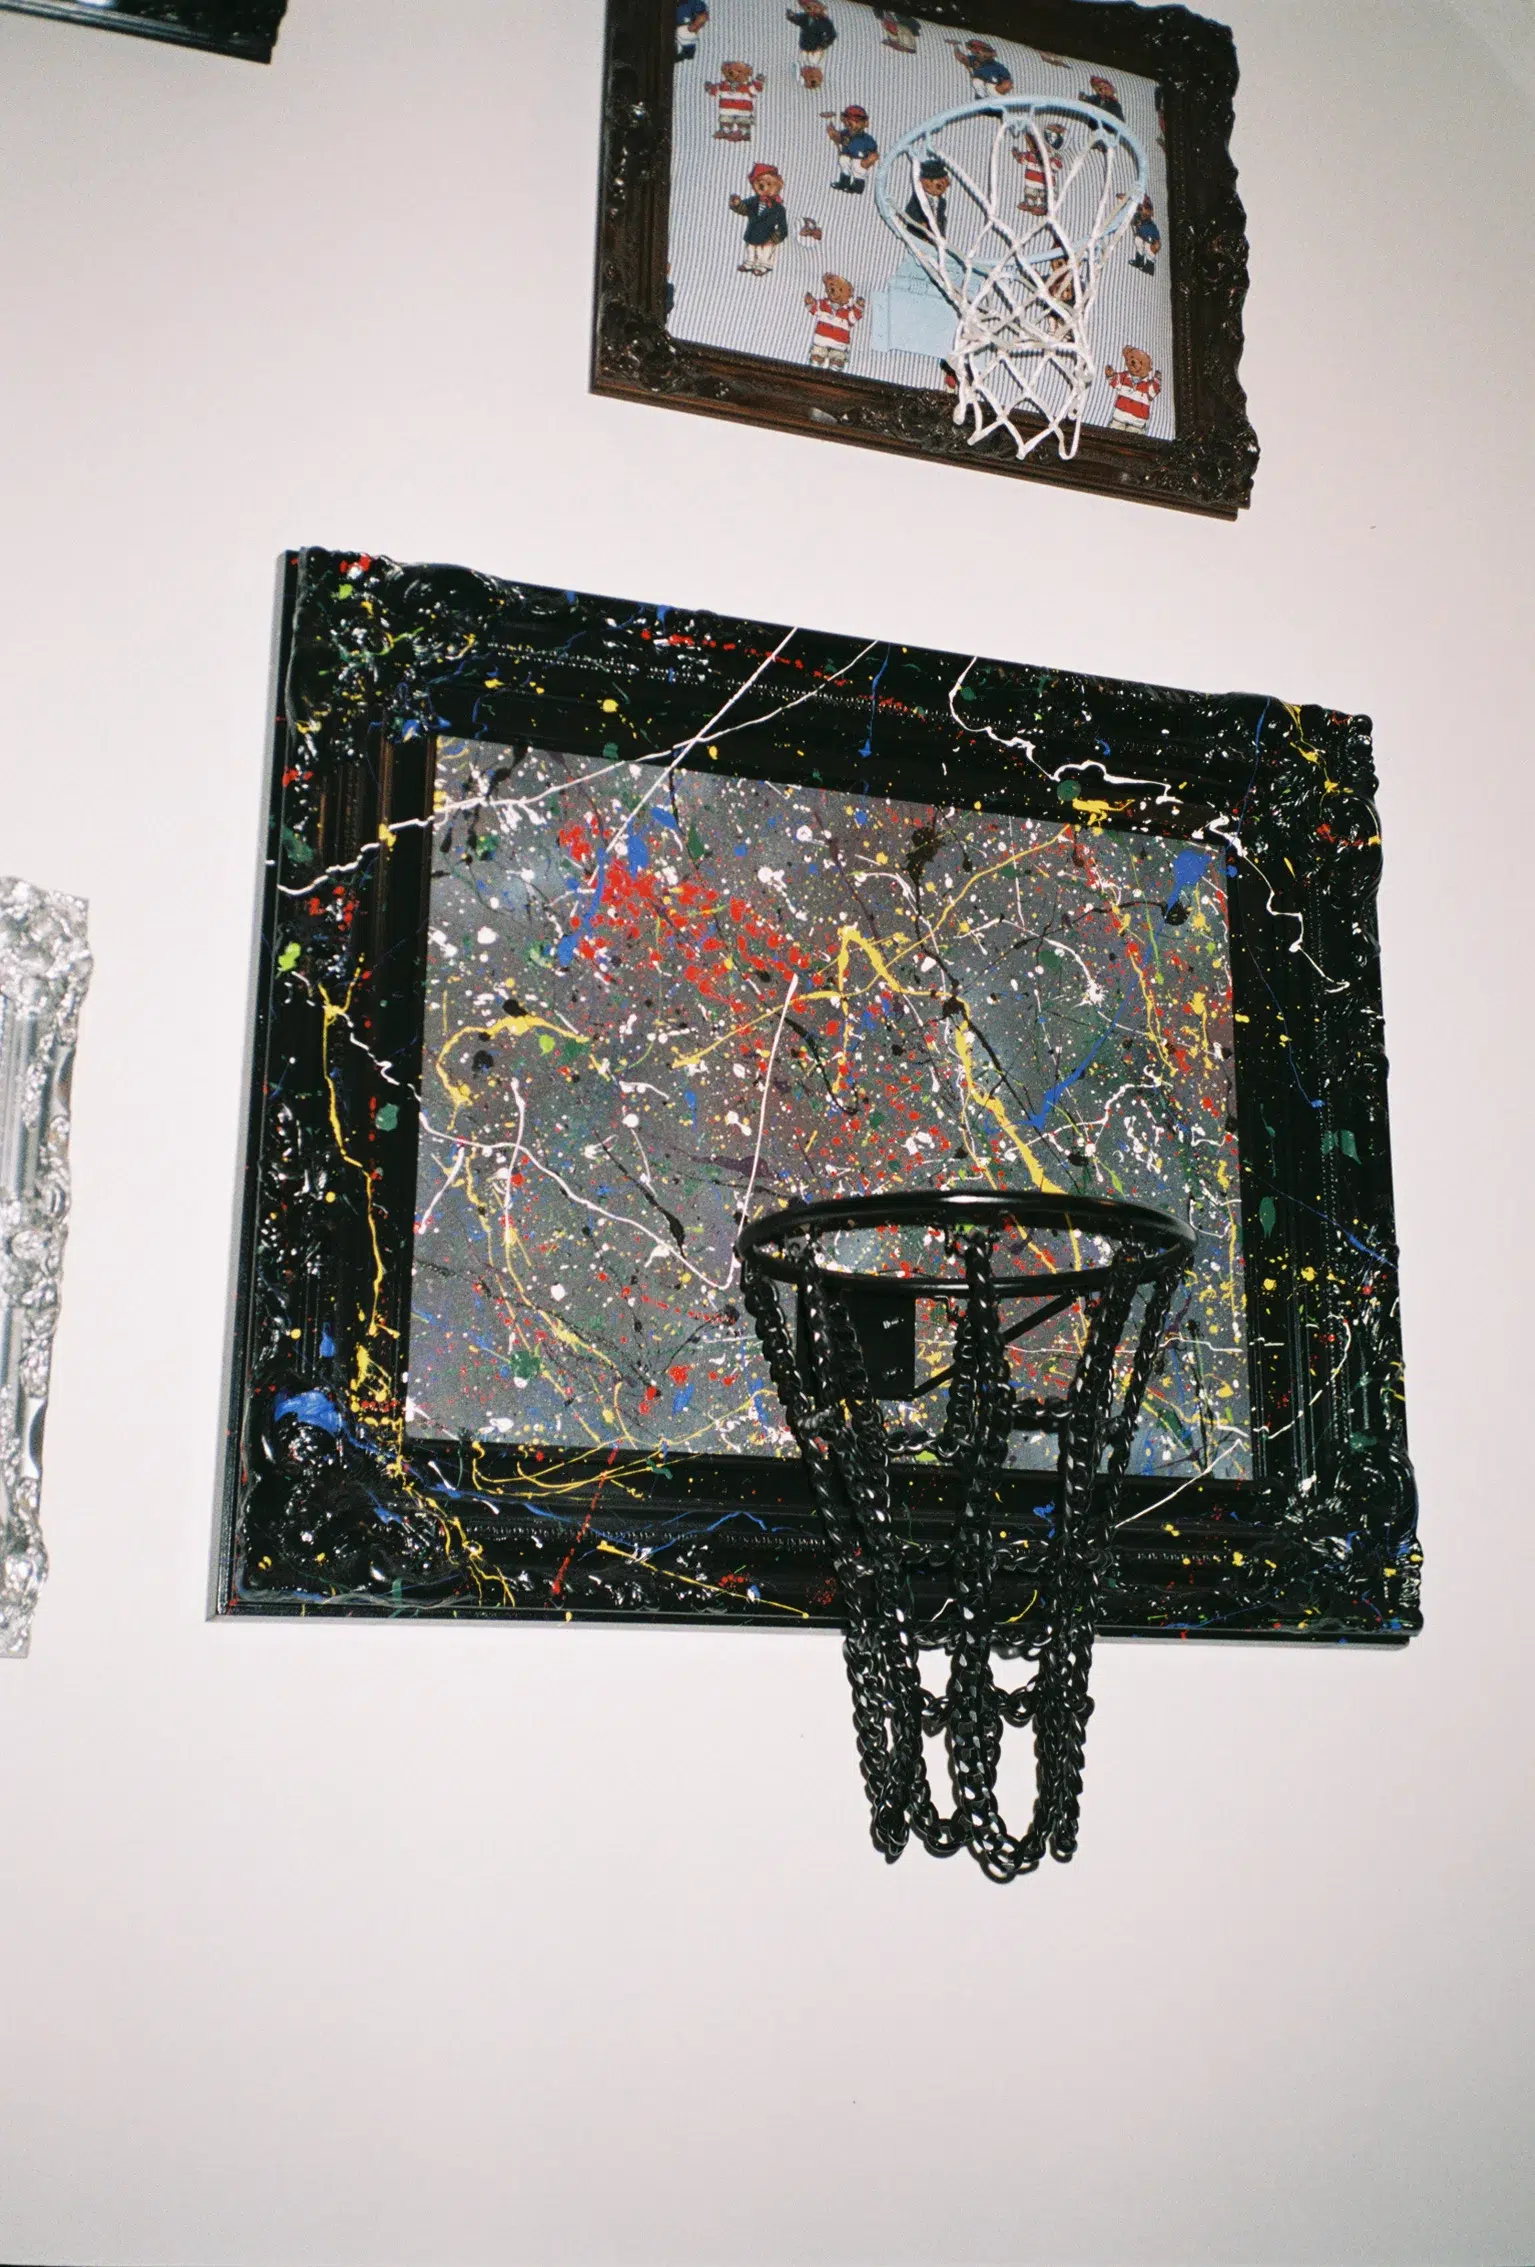 A Splatter Hoop mounted on a wall.